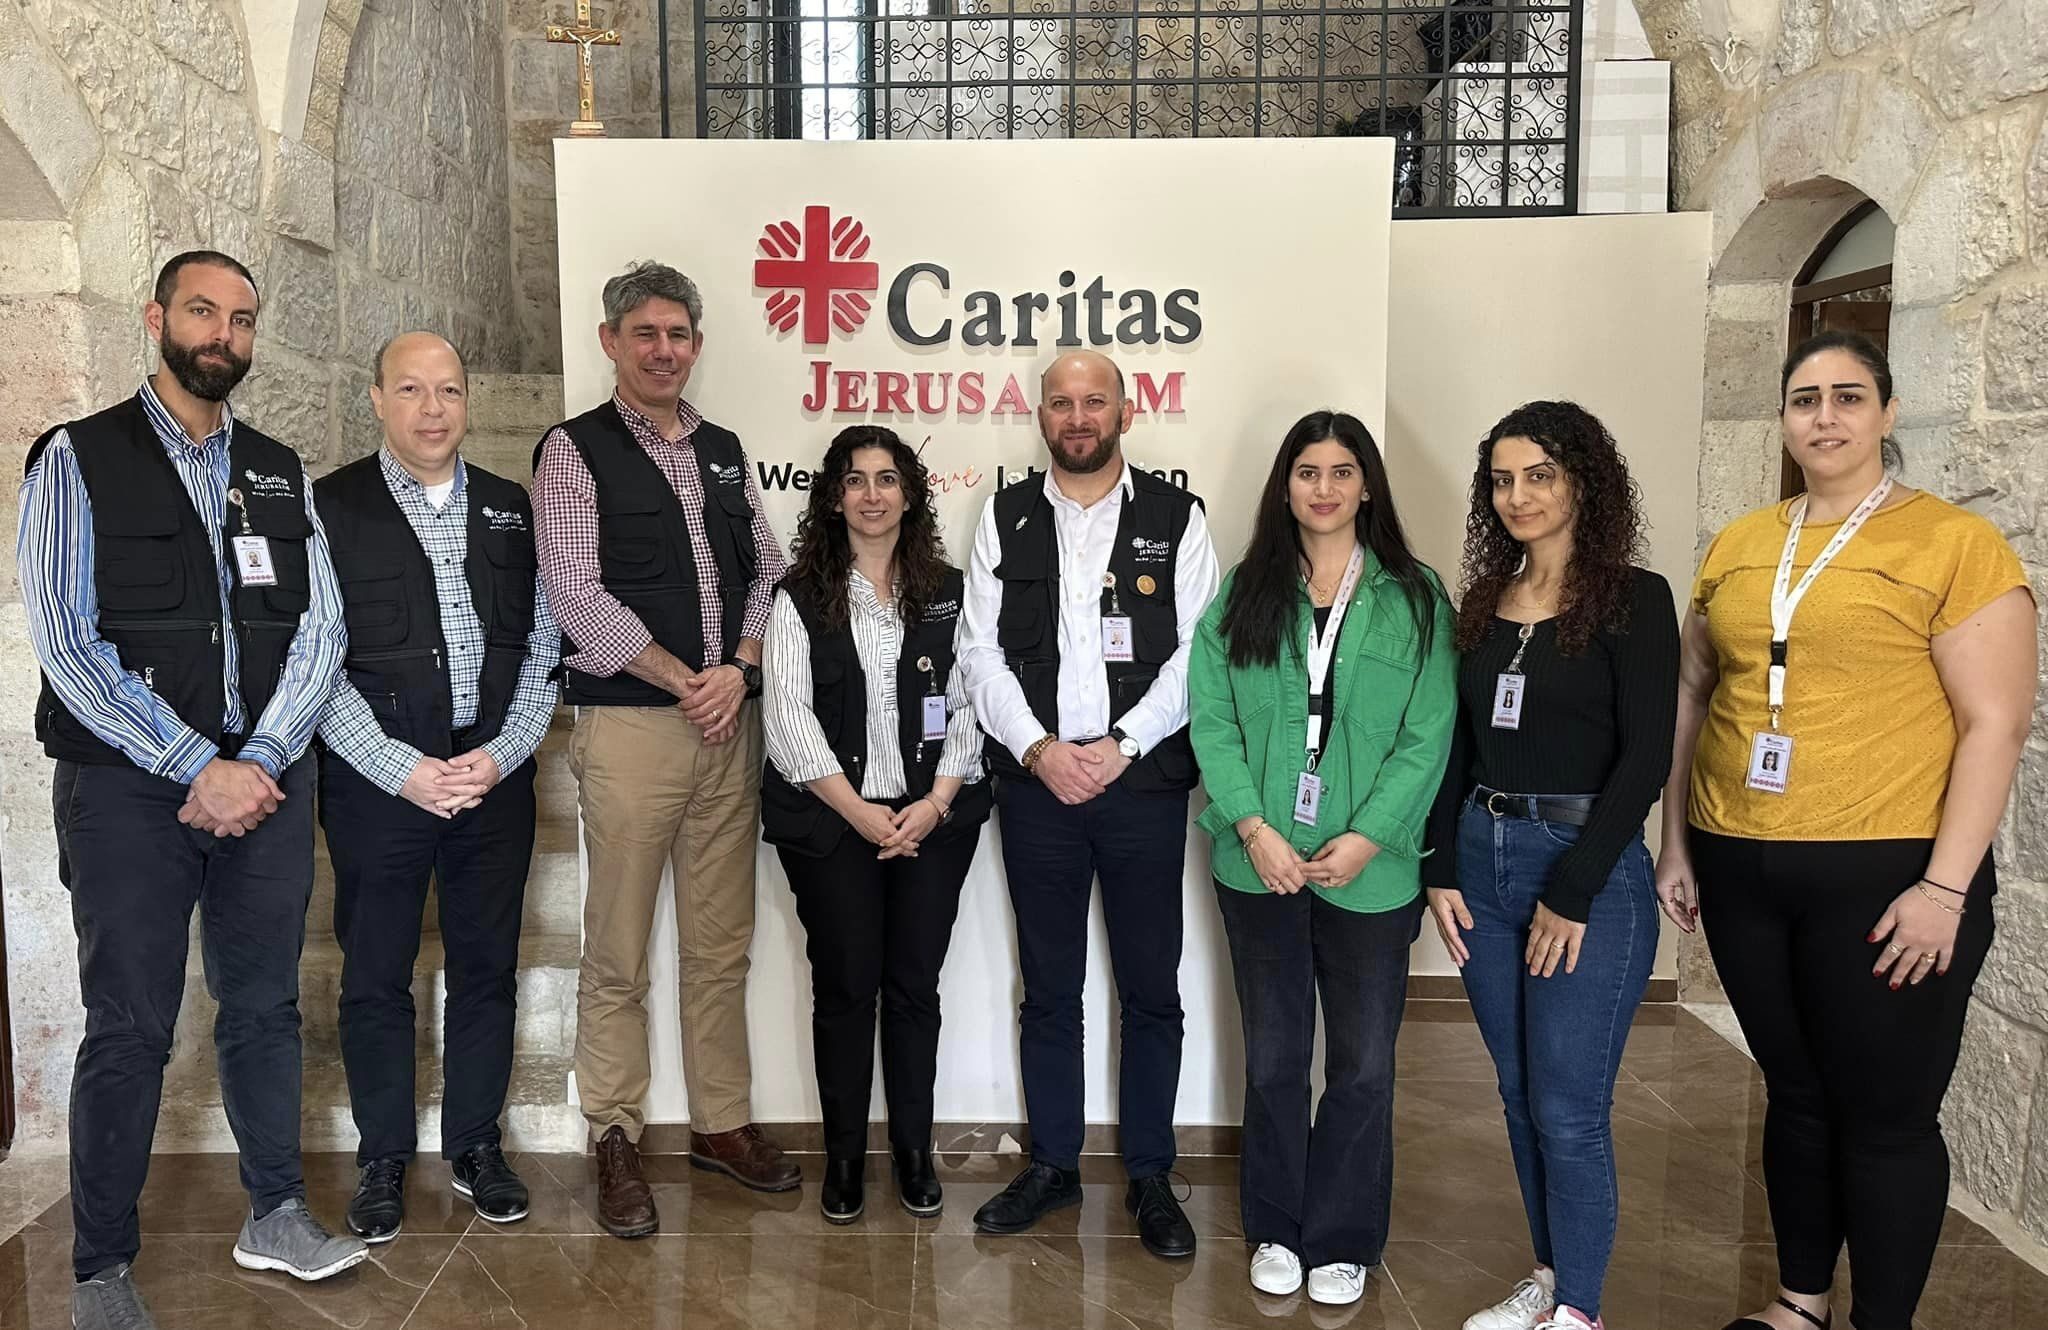 Caritas Internationalis secretary general visits the Holy Land